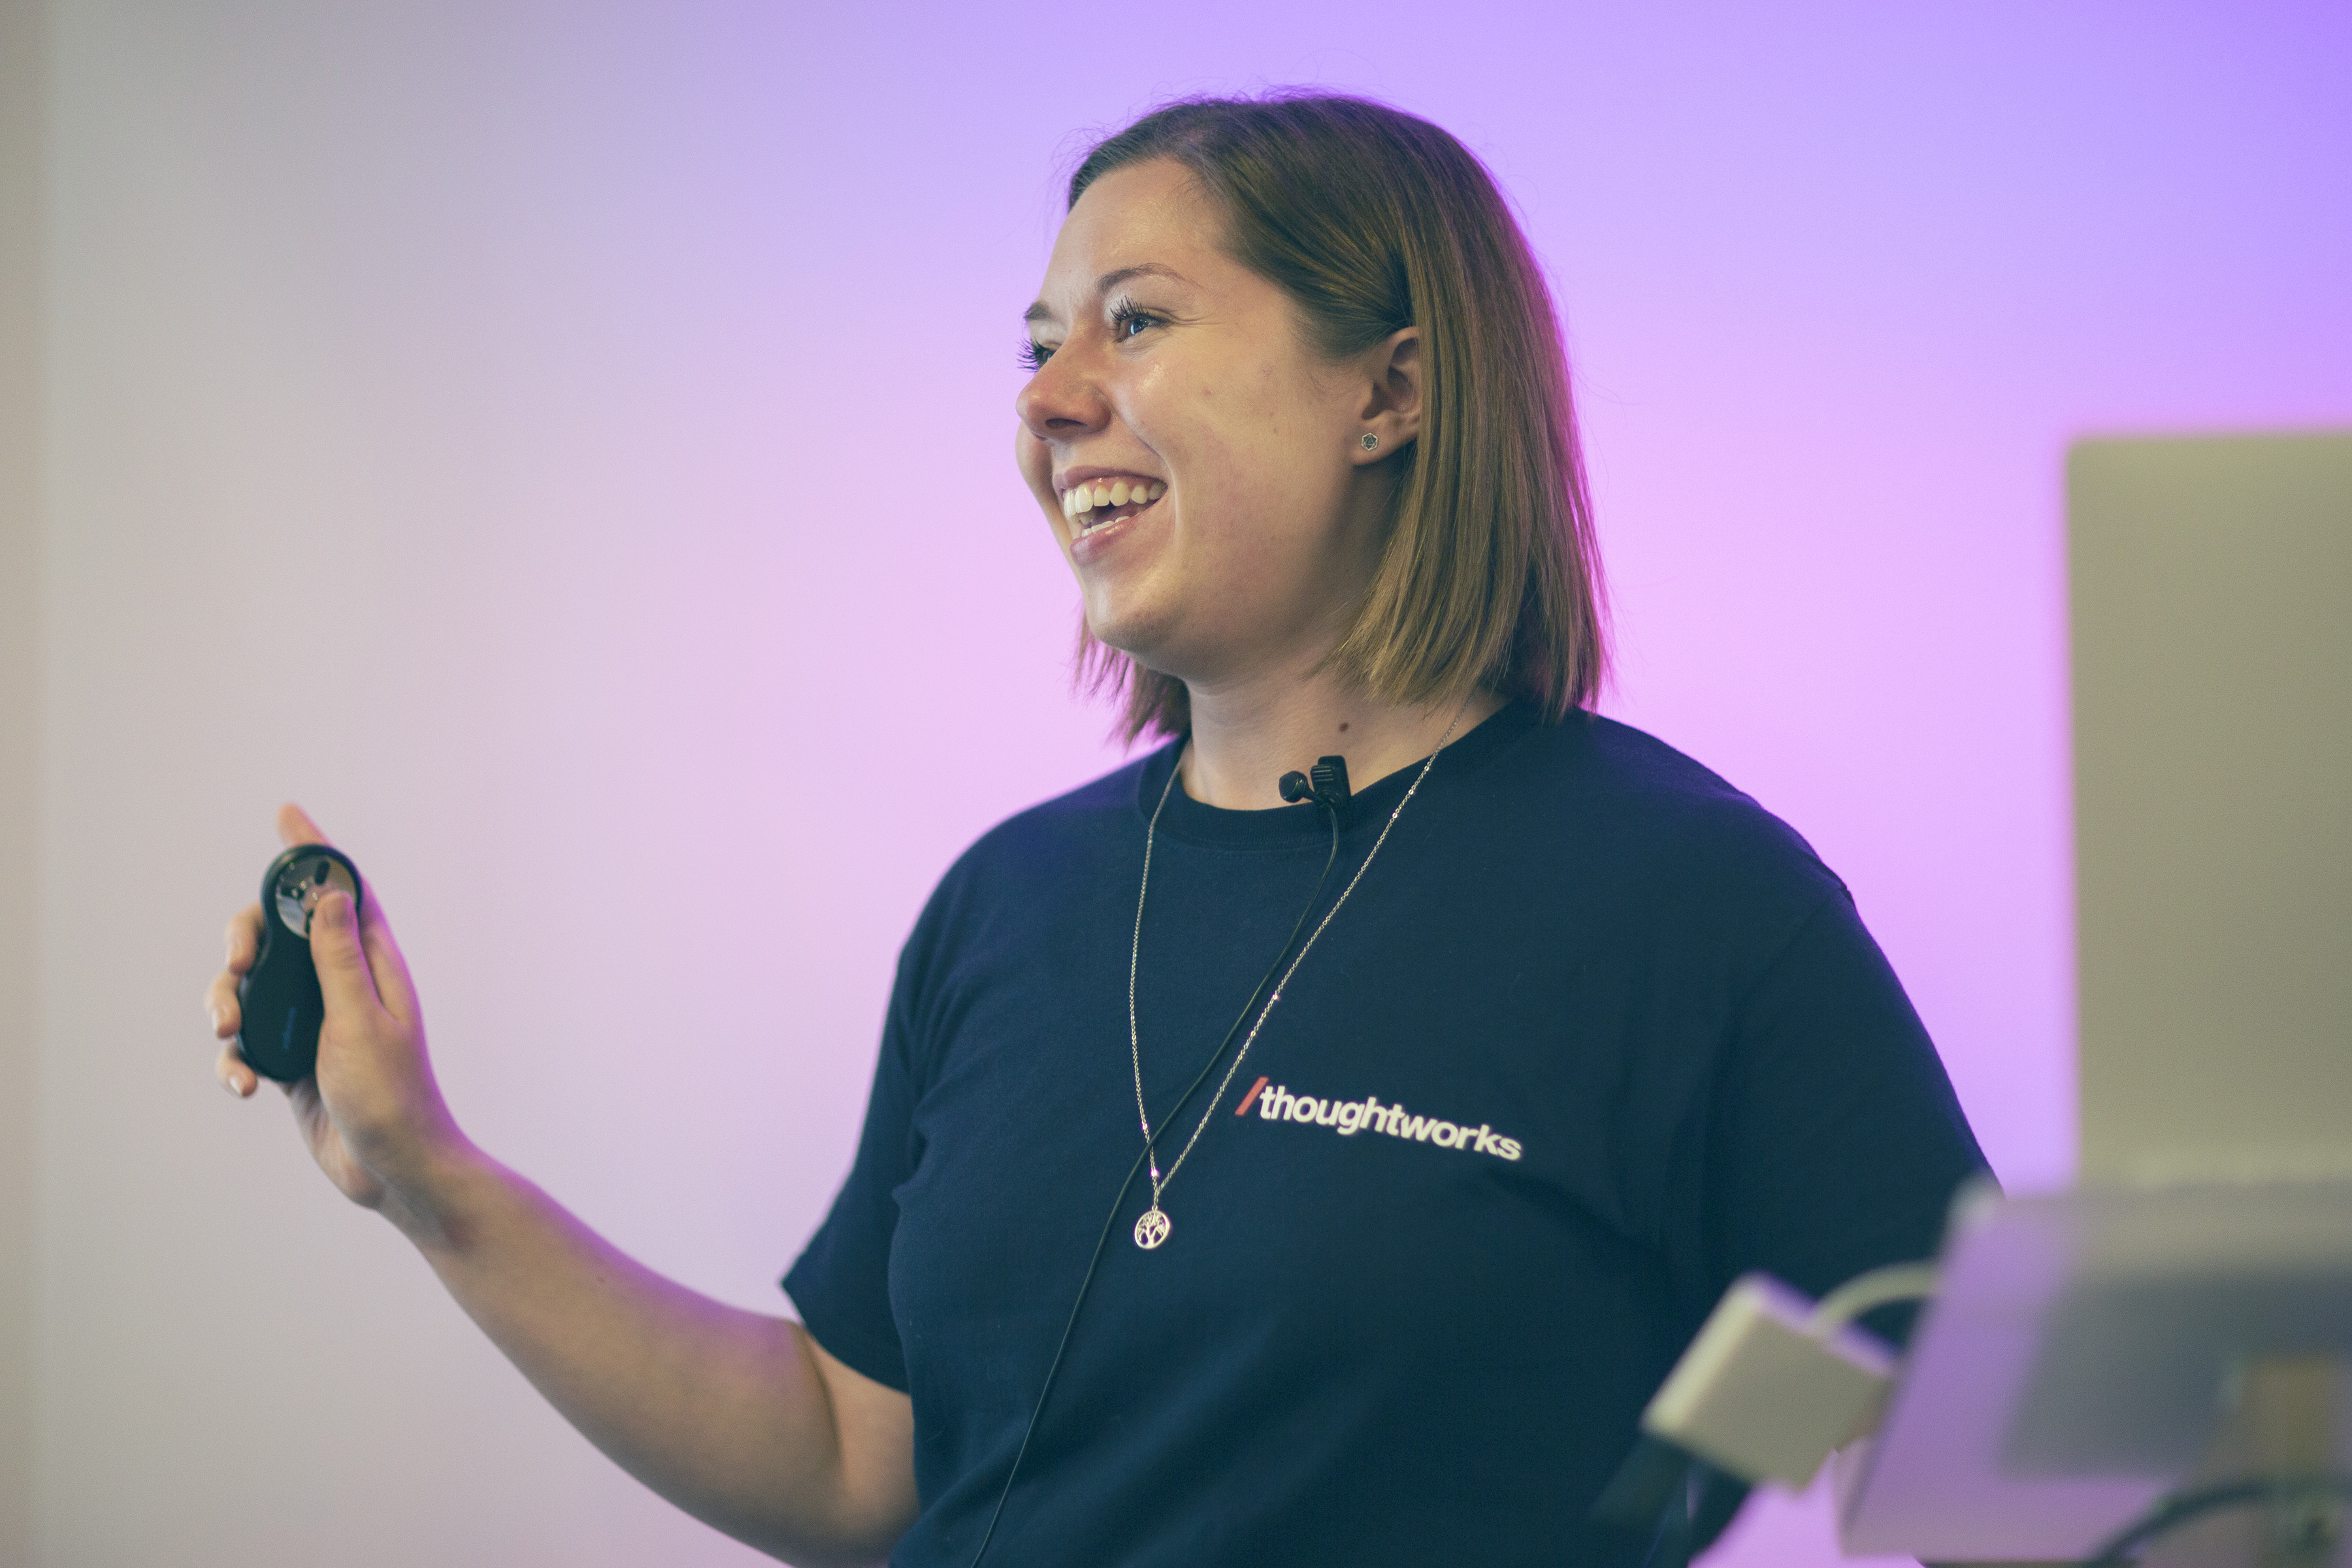 Cat Morris delivering a talk at XConf 2022 in Manchester, UK